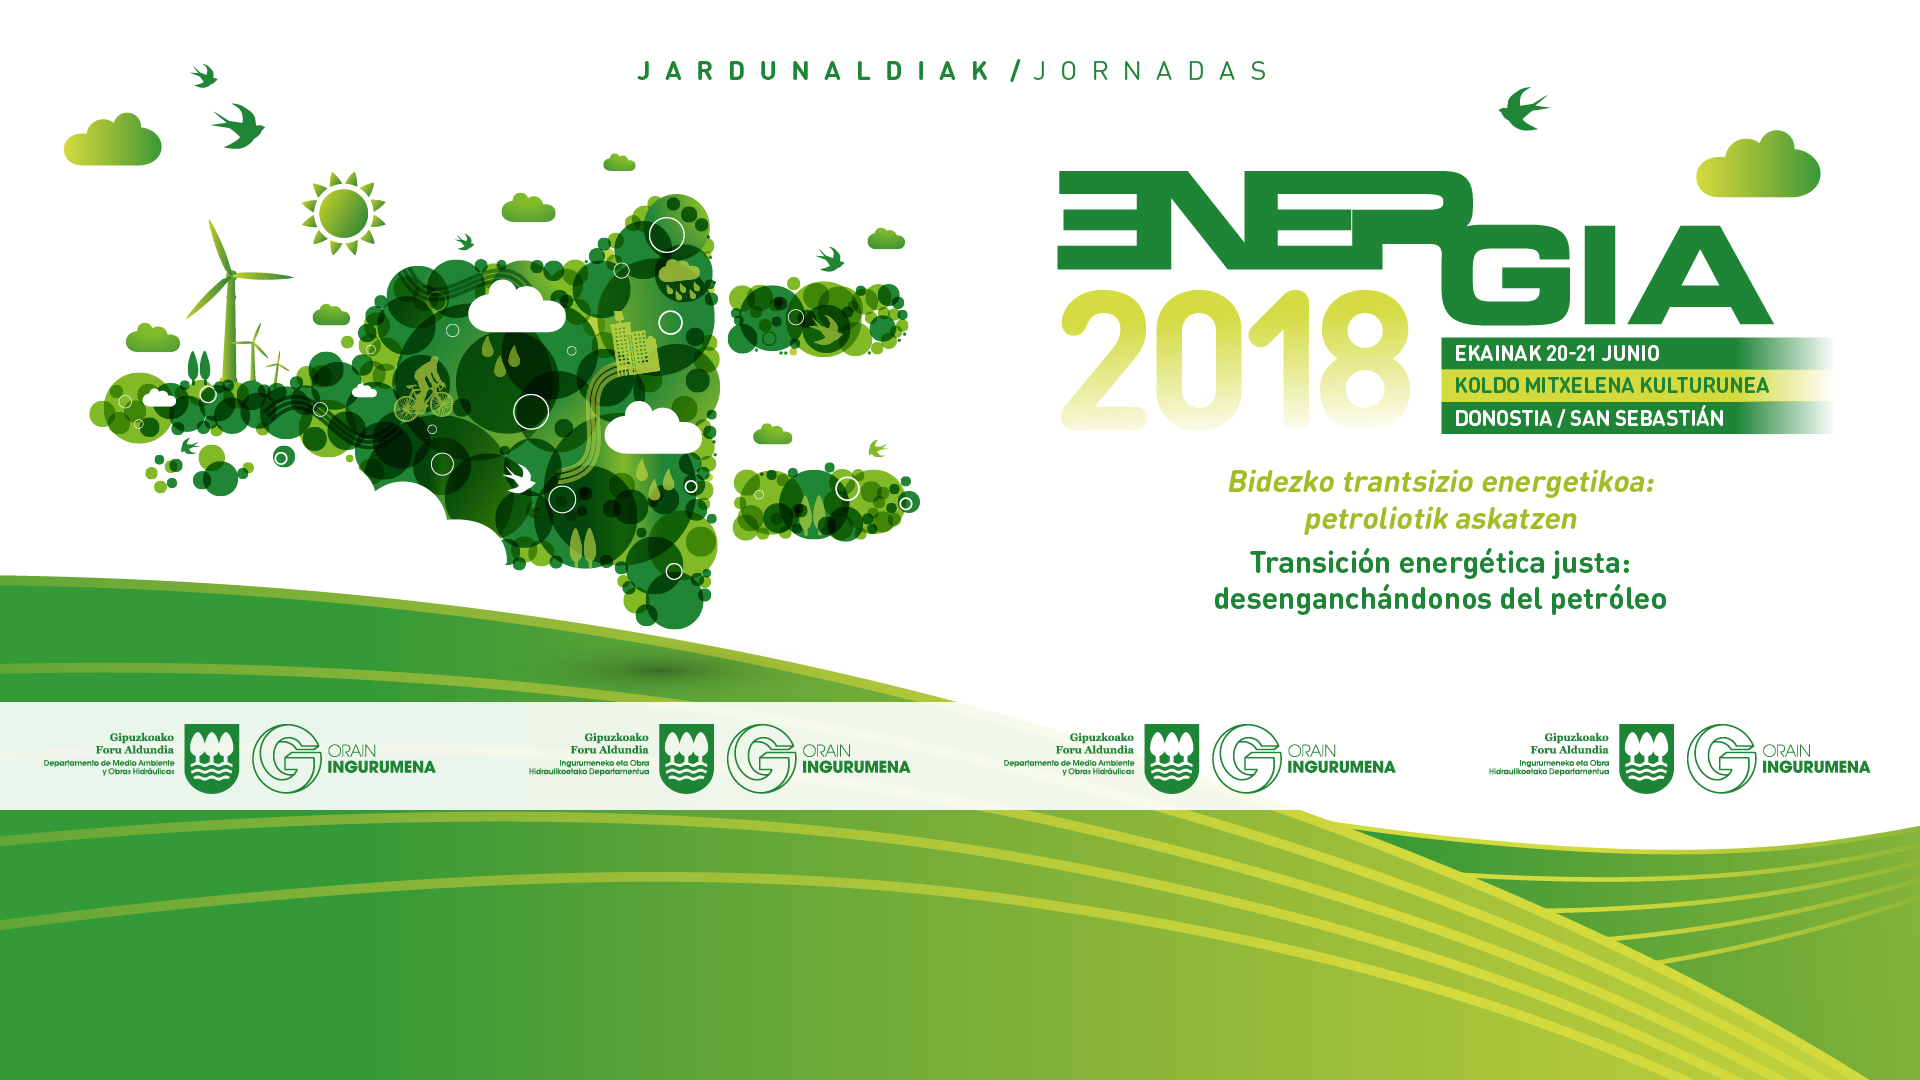 JORNADAS ENERGIA 2018